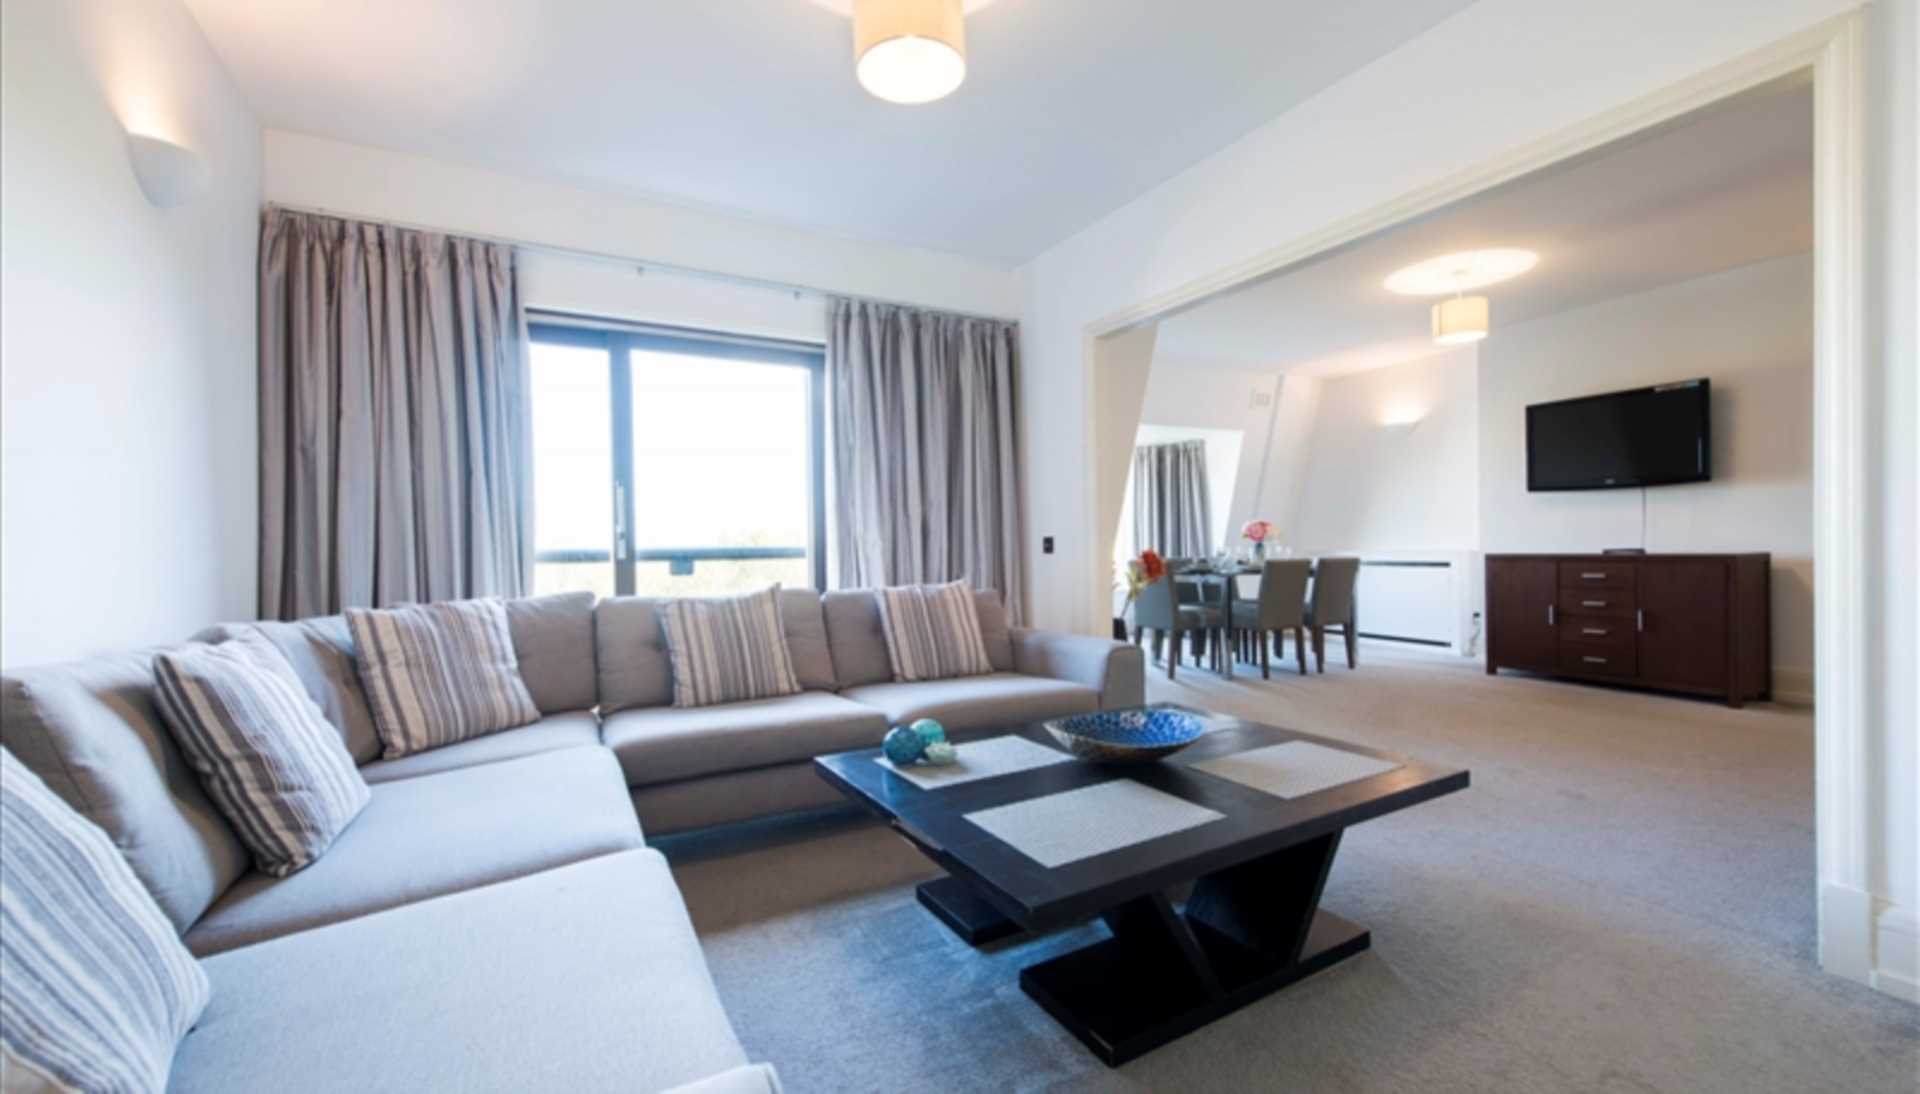 London NW8 7HY 5 bed penthouse rental property internal/external image-8